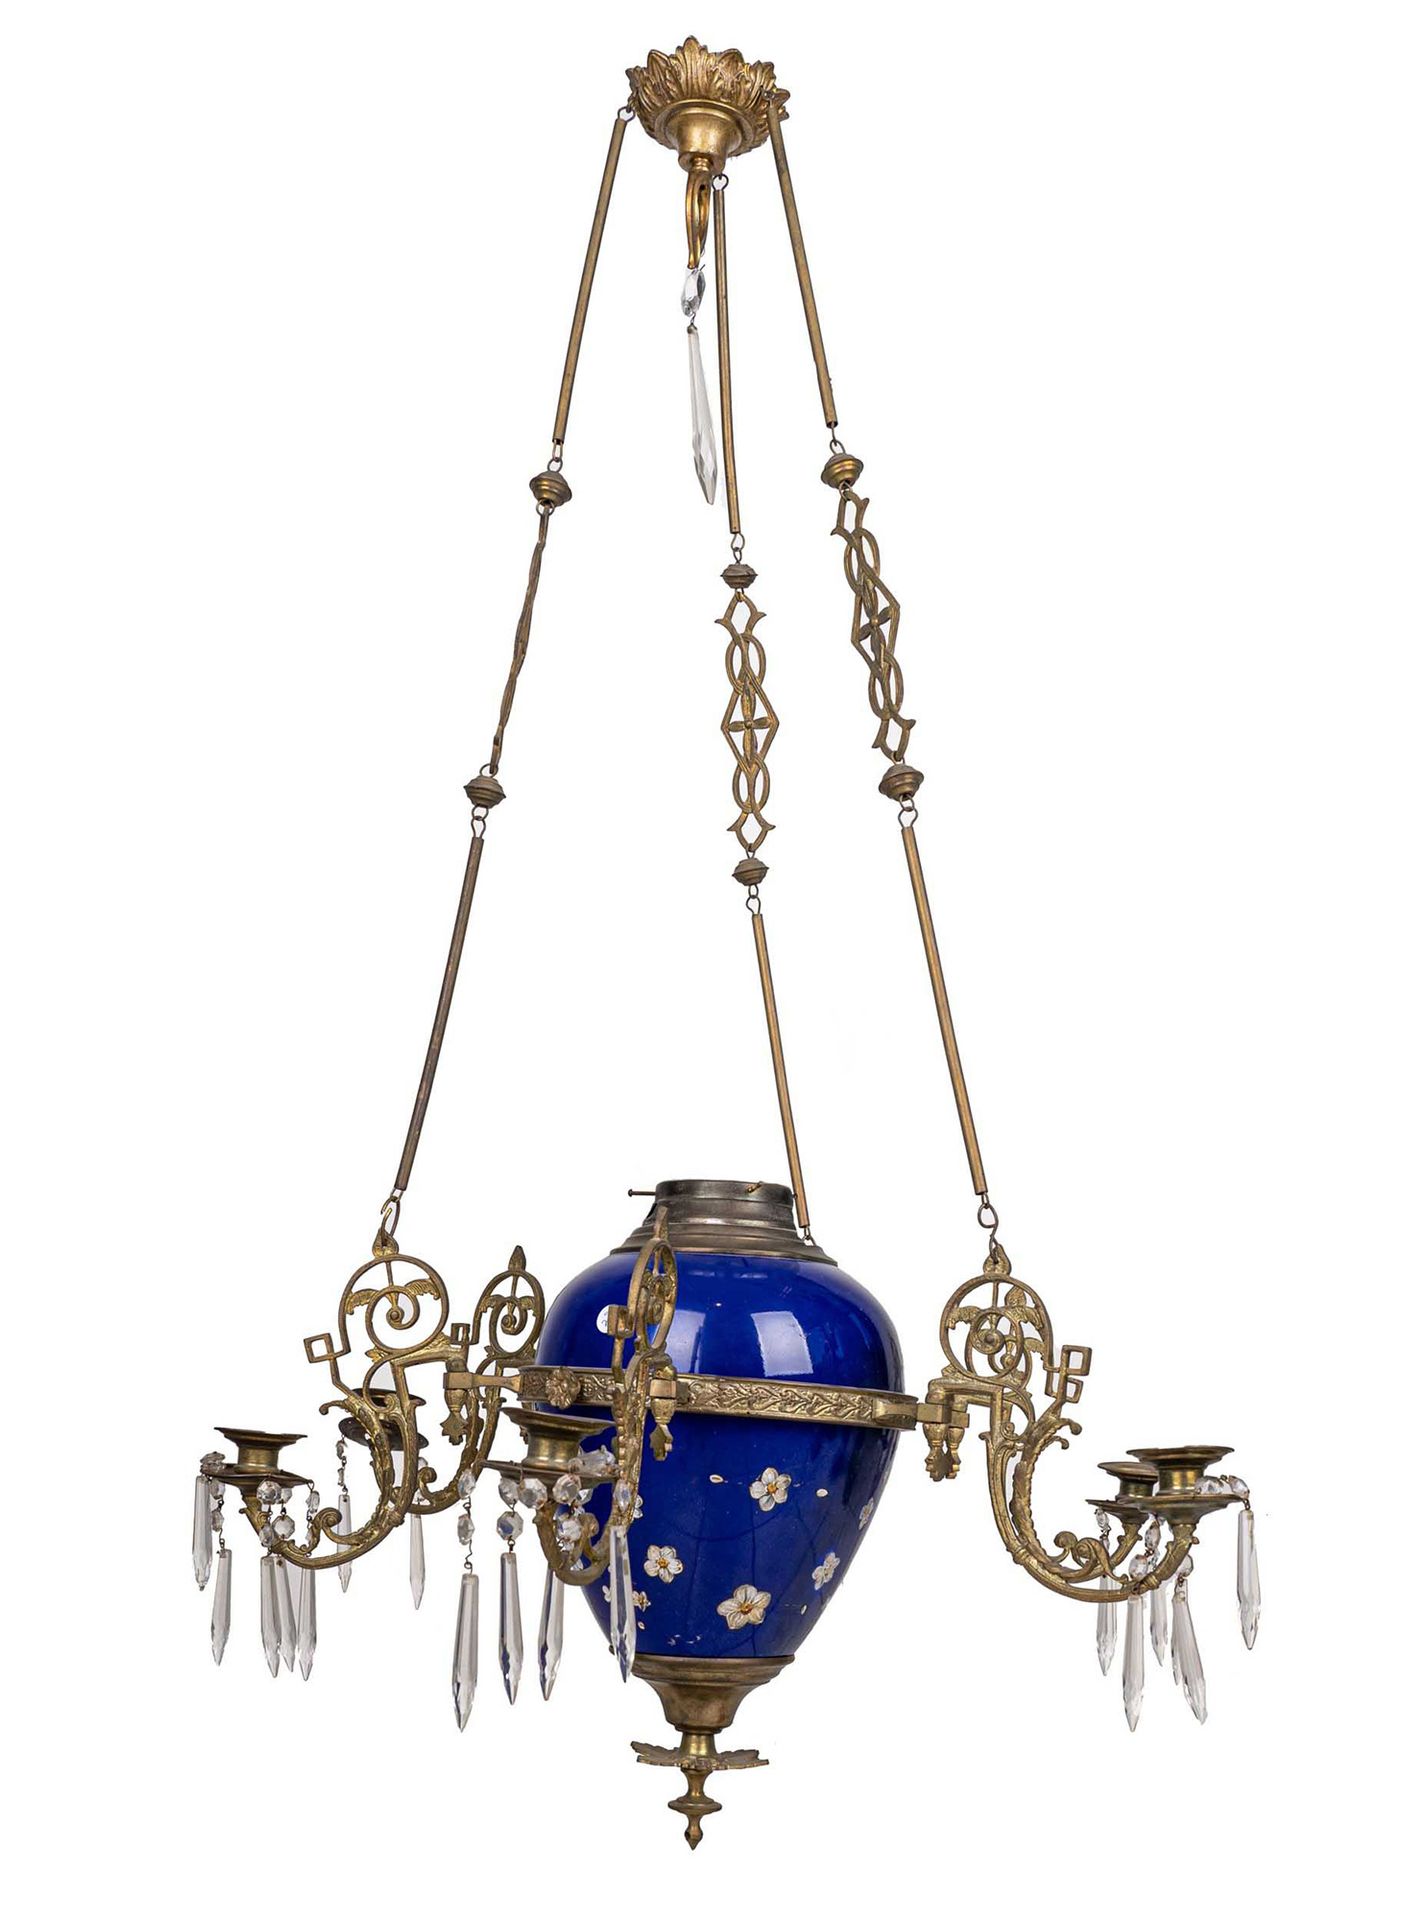 Null 油吊灯

19世纪末

蓝瓷和鎏金青铜，六臂，中央截断的金字塔体饰有花朵，六个烛台有青铜水龙头和水晶吊坠